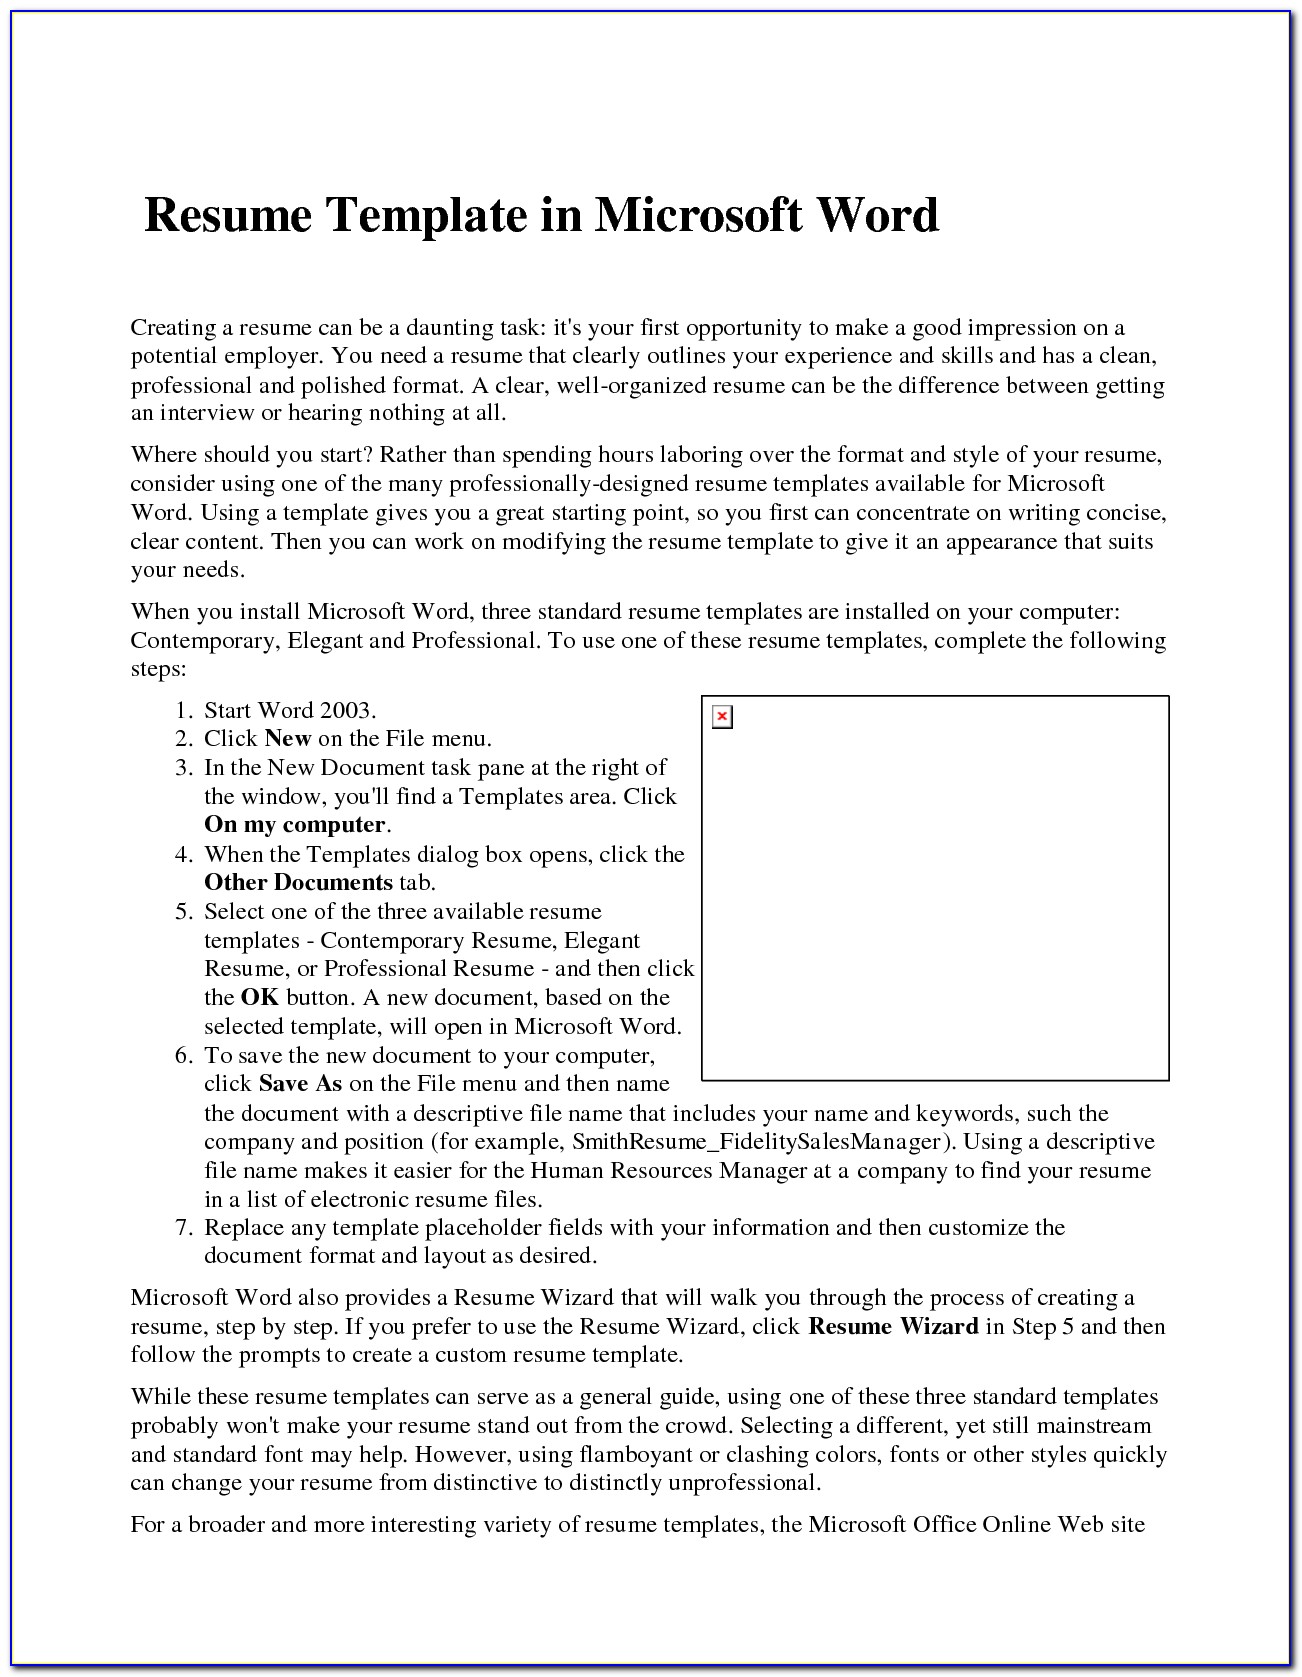 Resume Wizard Word 2010